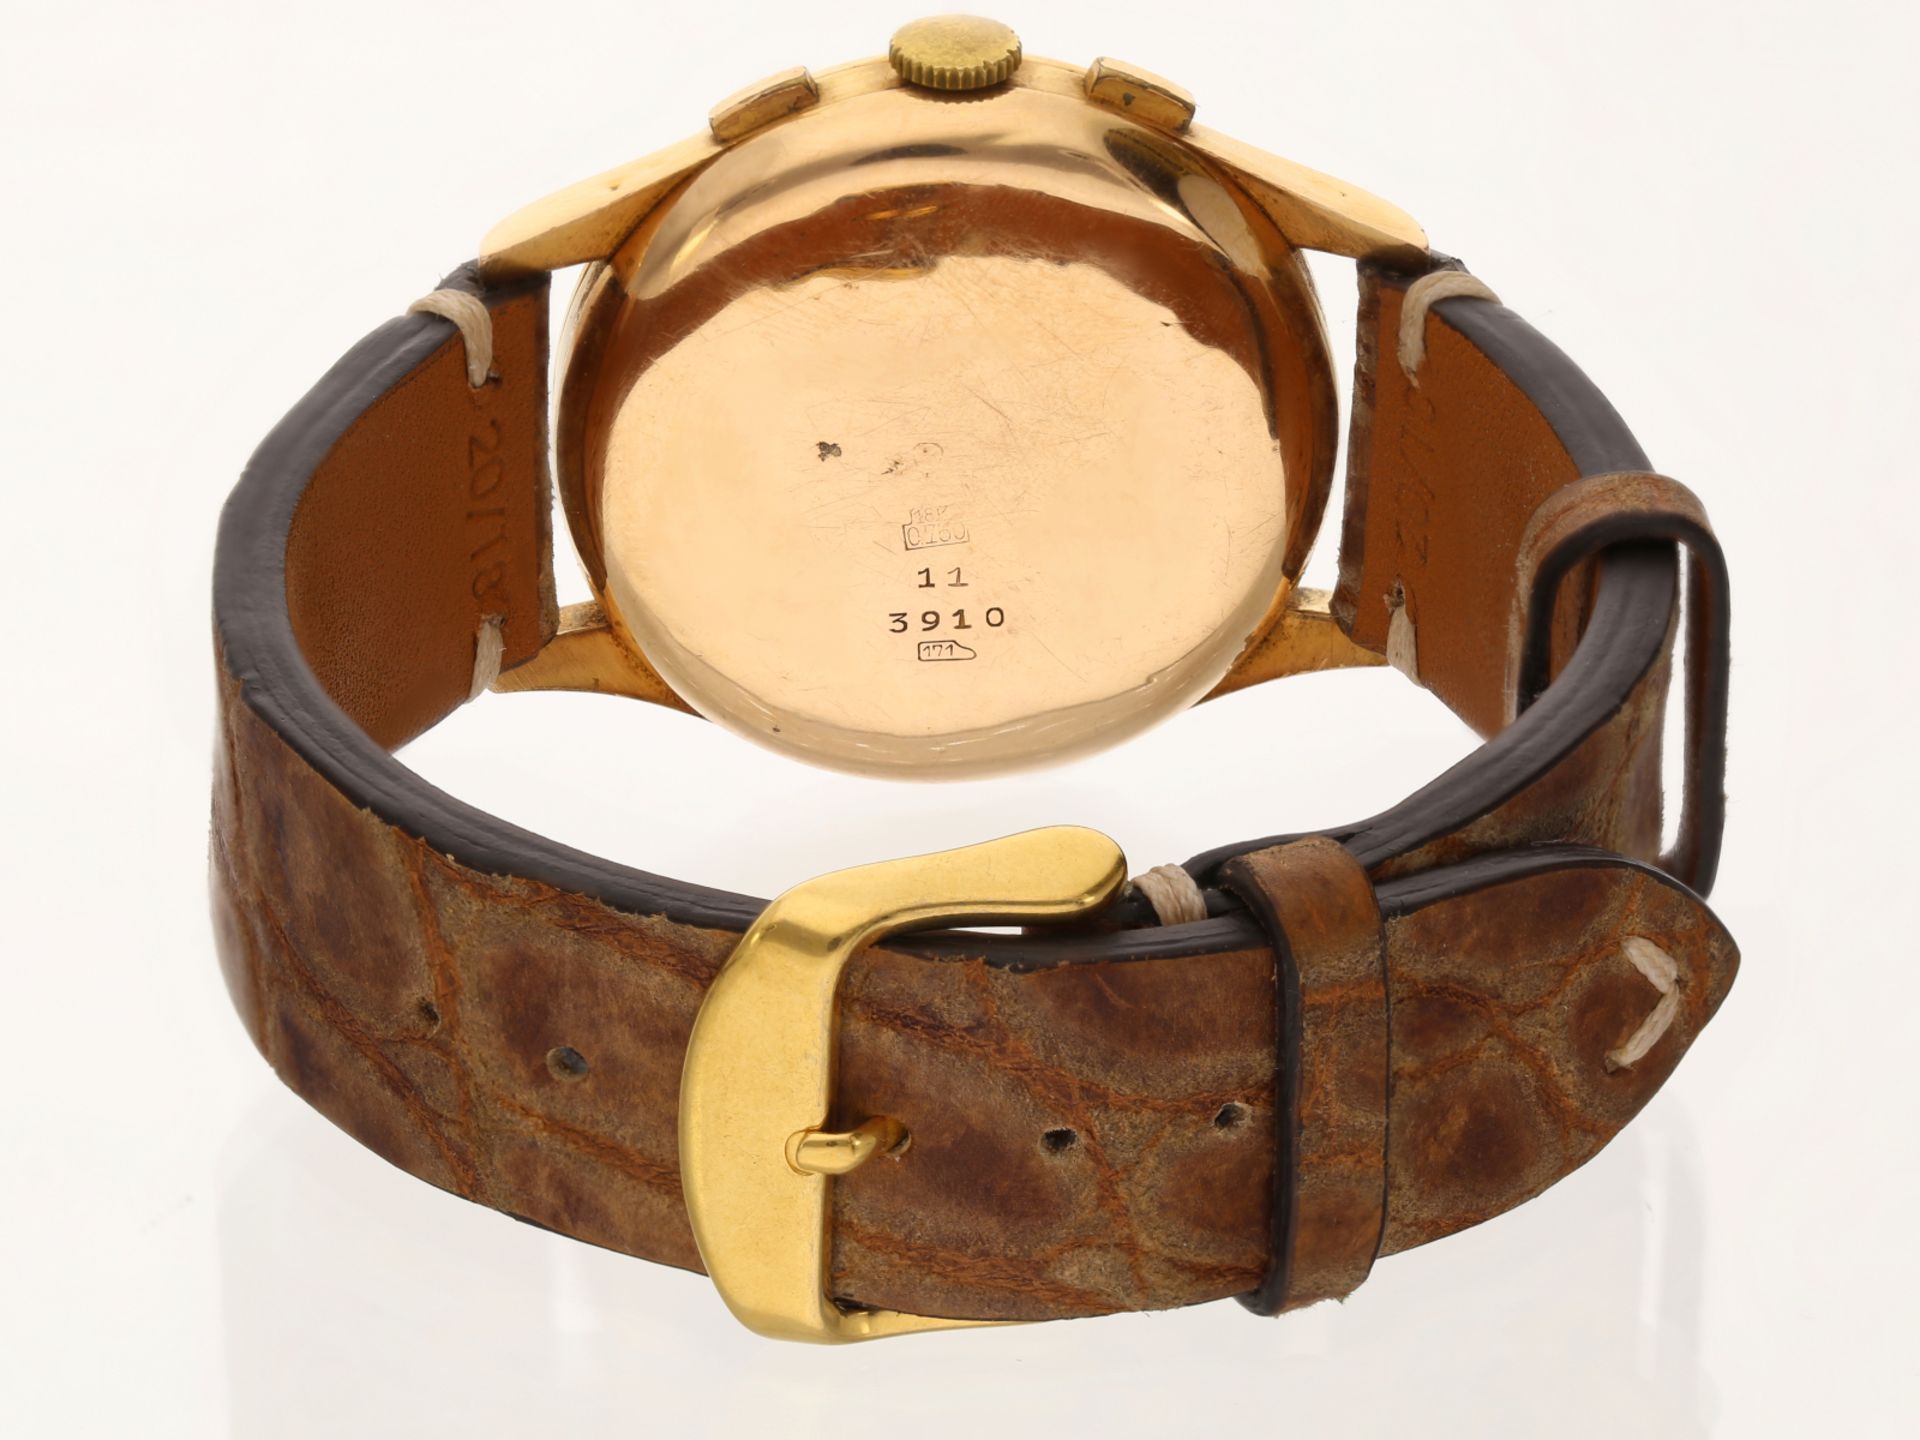 Armbanduhr: vintage overzise "Chronographe Suisse" Ref.3910 in 18K Gold, mit Box, 1950er - Bild 3 aus 3